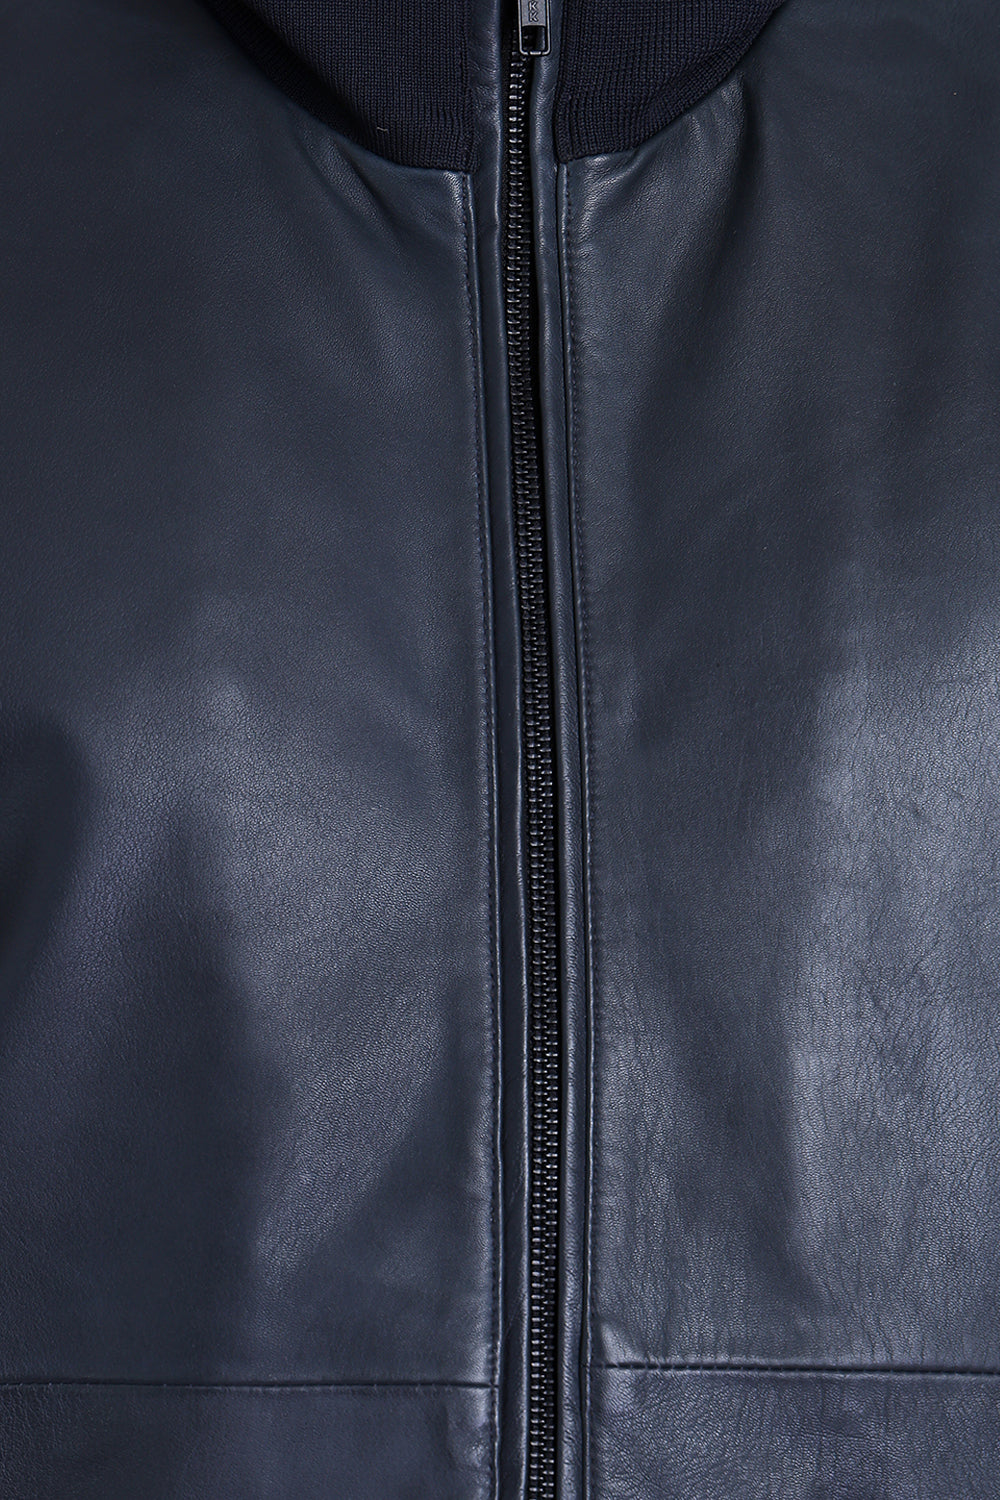 Justanned Aegean Leather Jacket